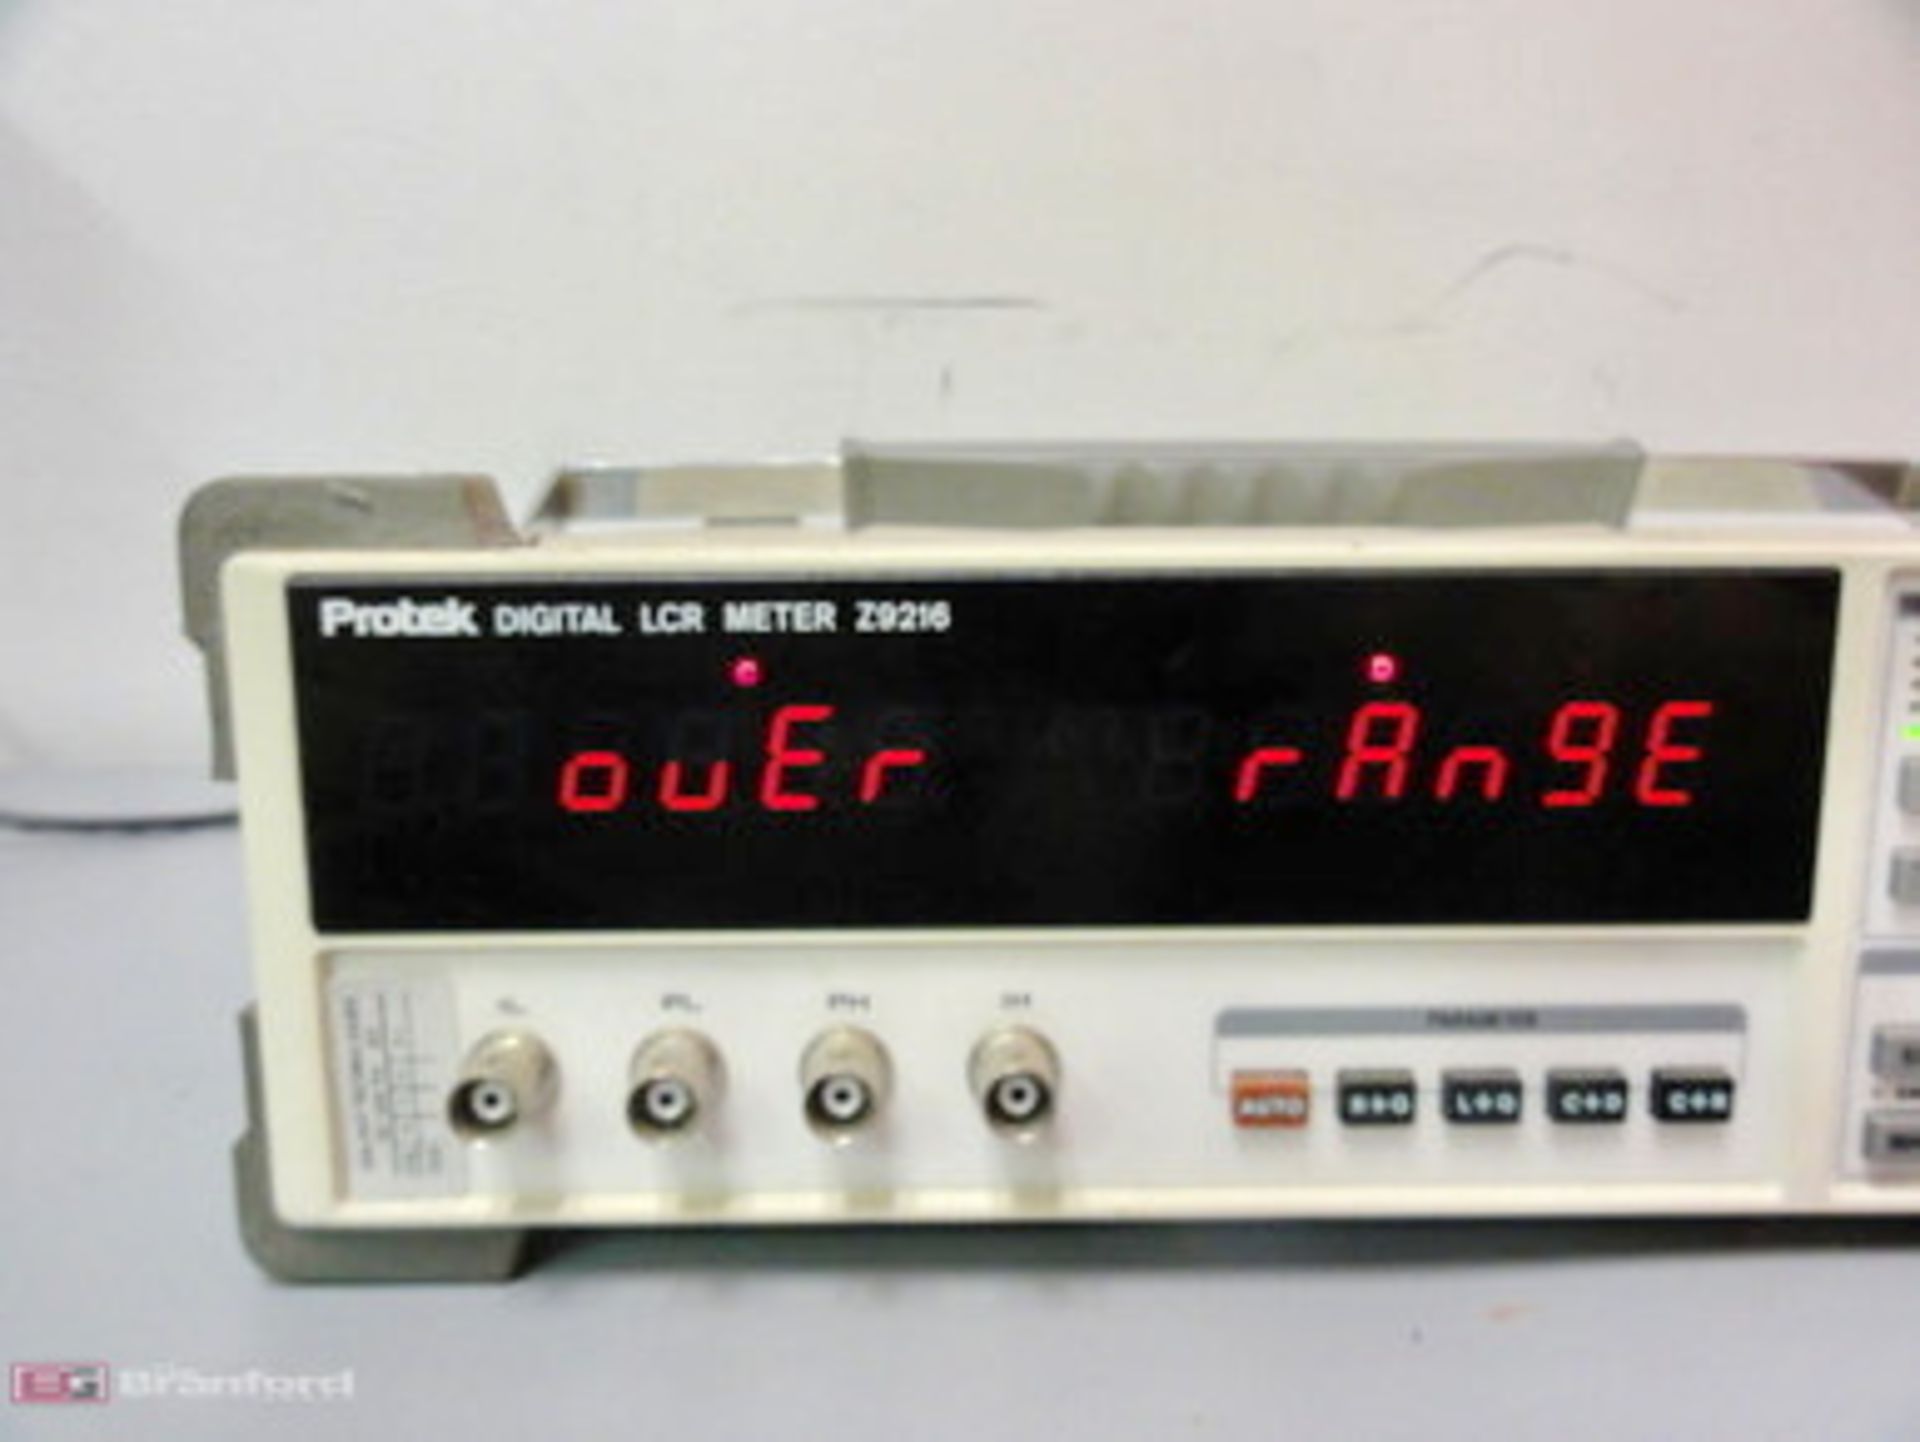 Protek Z9216 digital lcr meter - Image 2 of 3